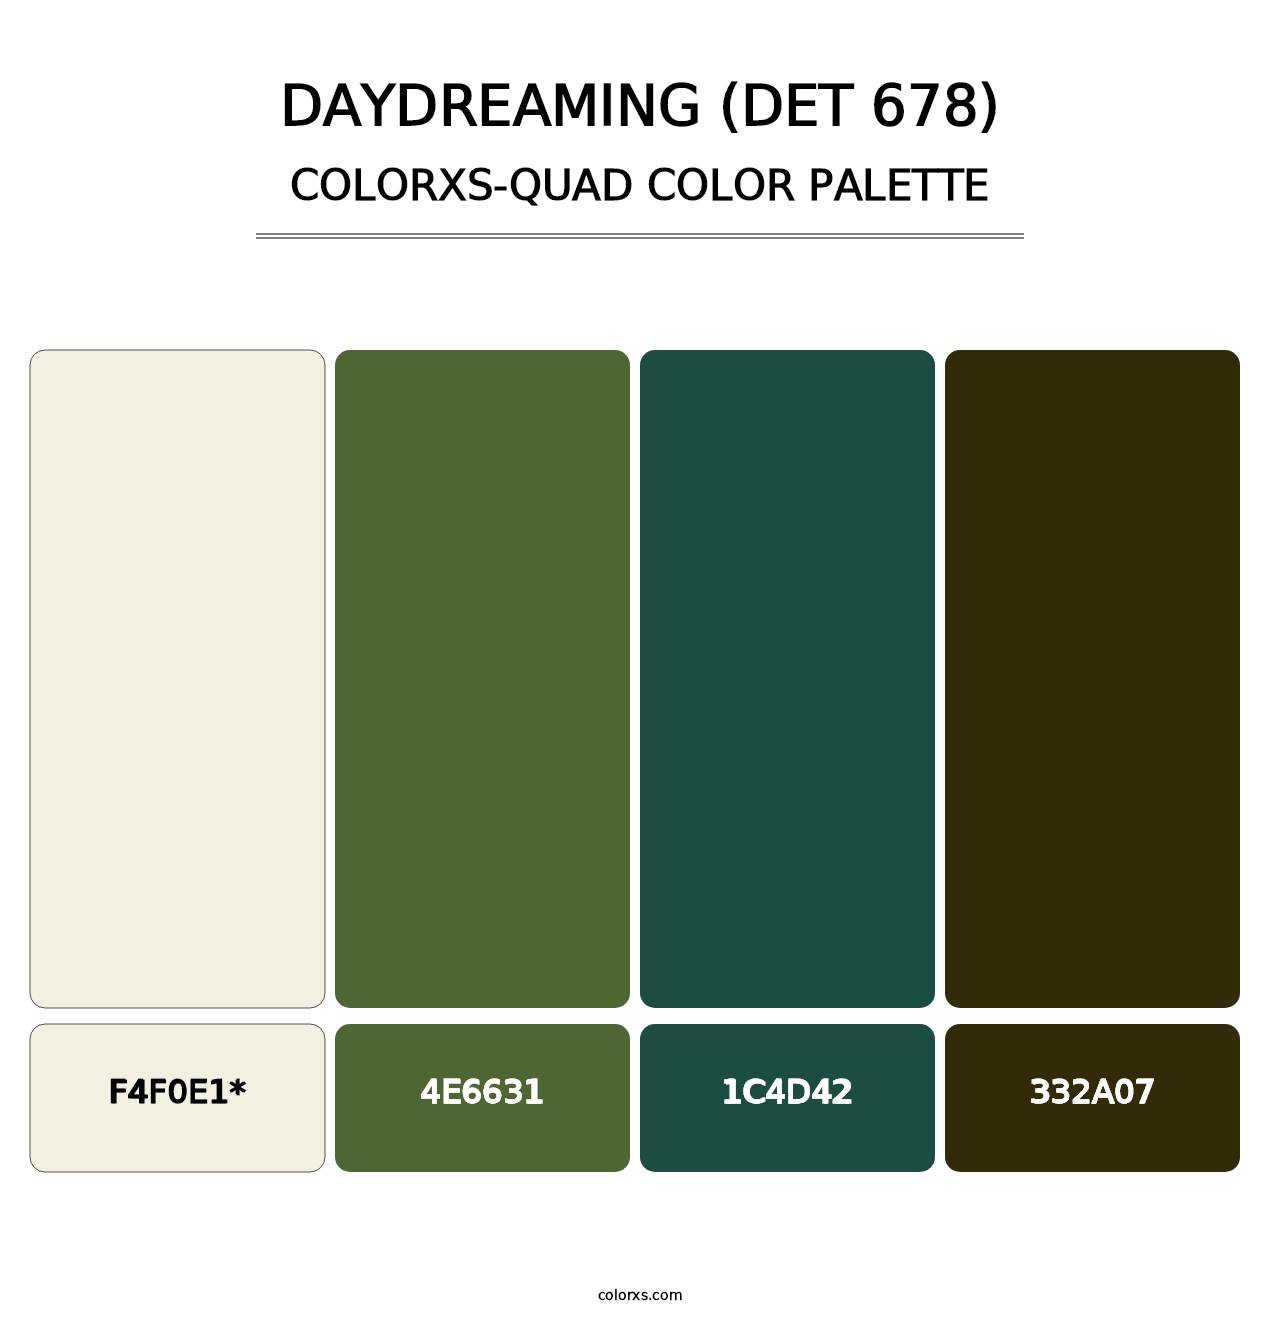 Daydreaming (DET 678) - Colorxs Quad Palette